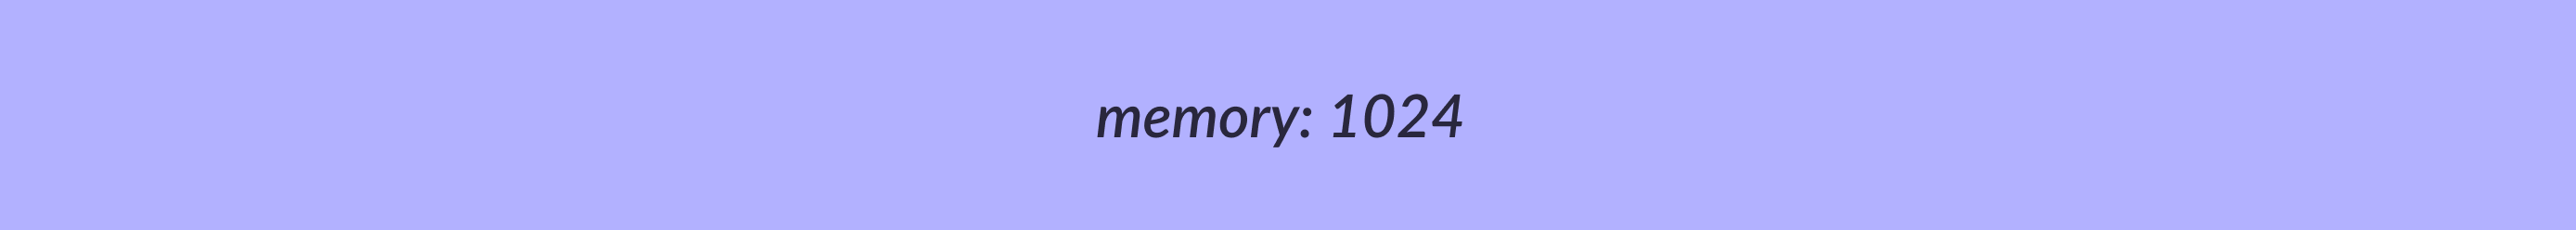  memory option in the settings' vapor.yml file